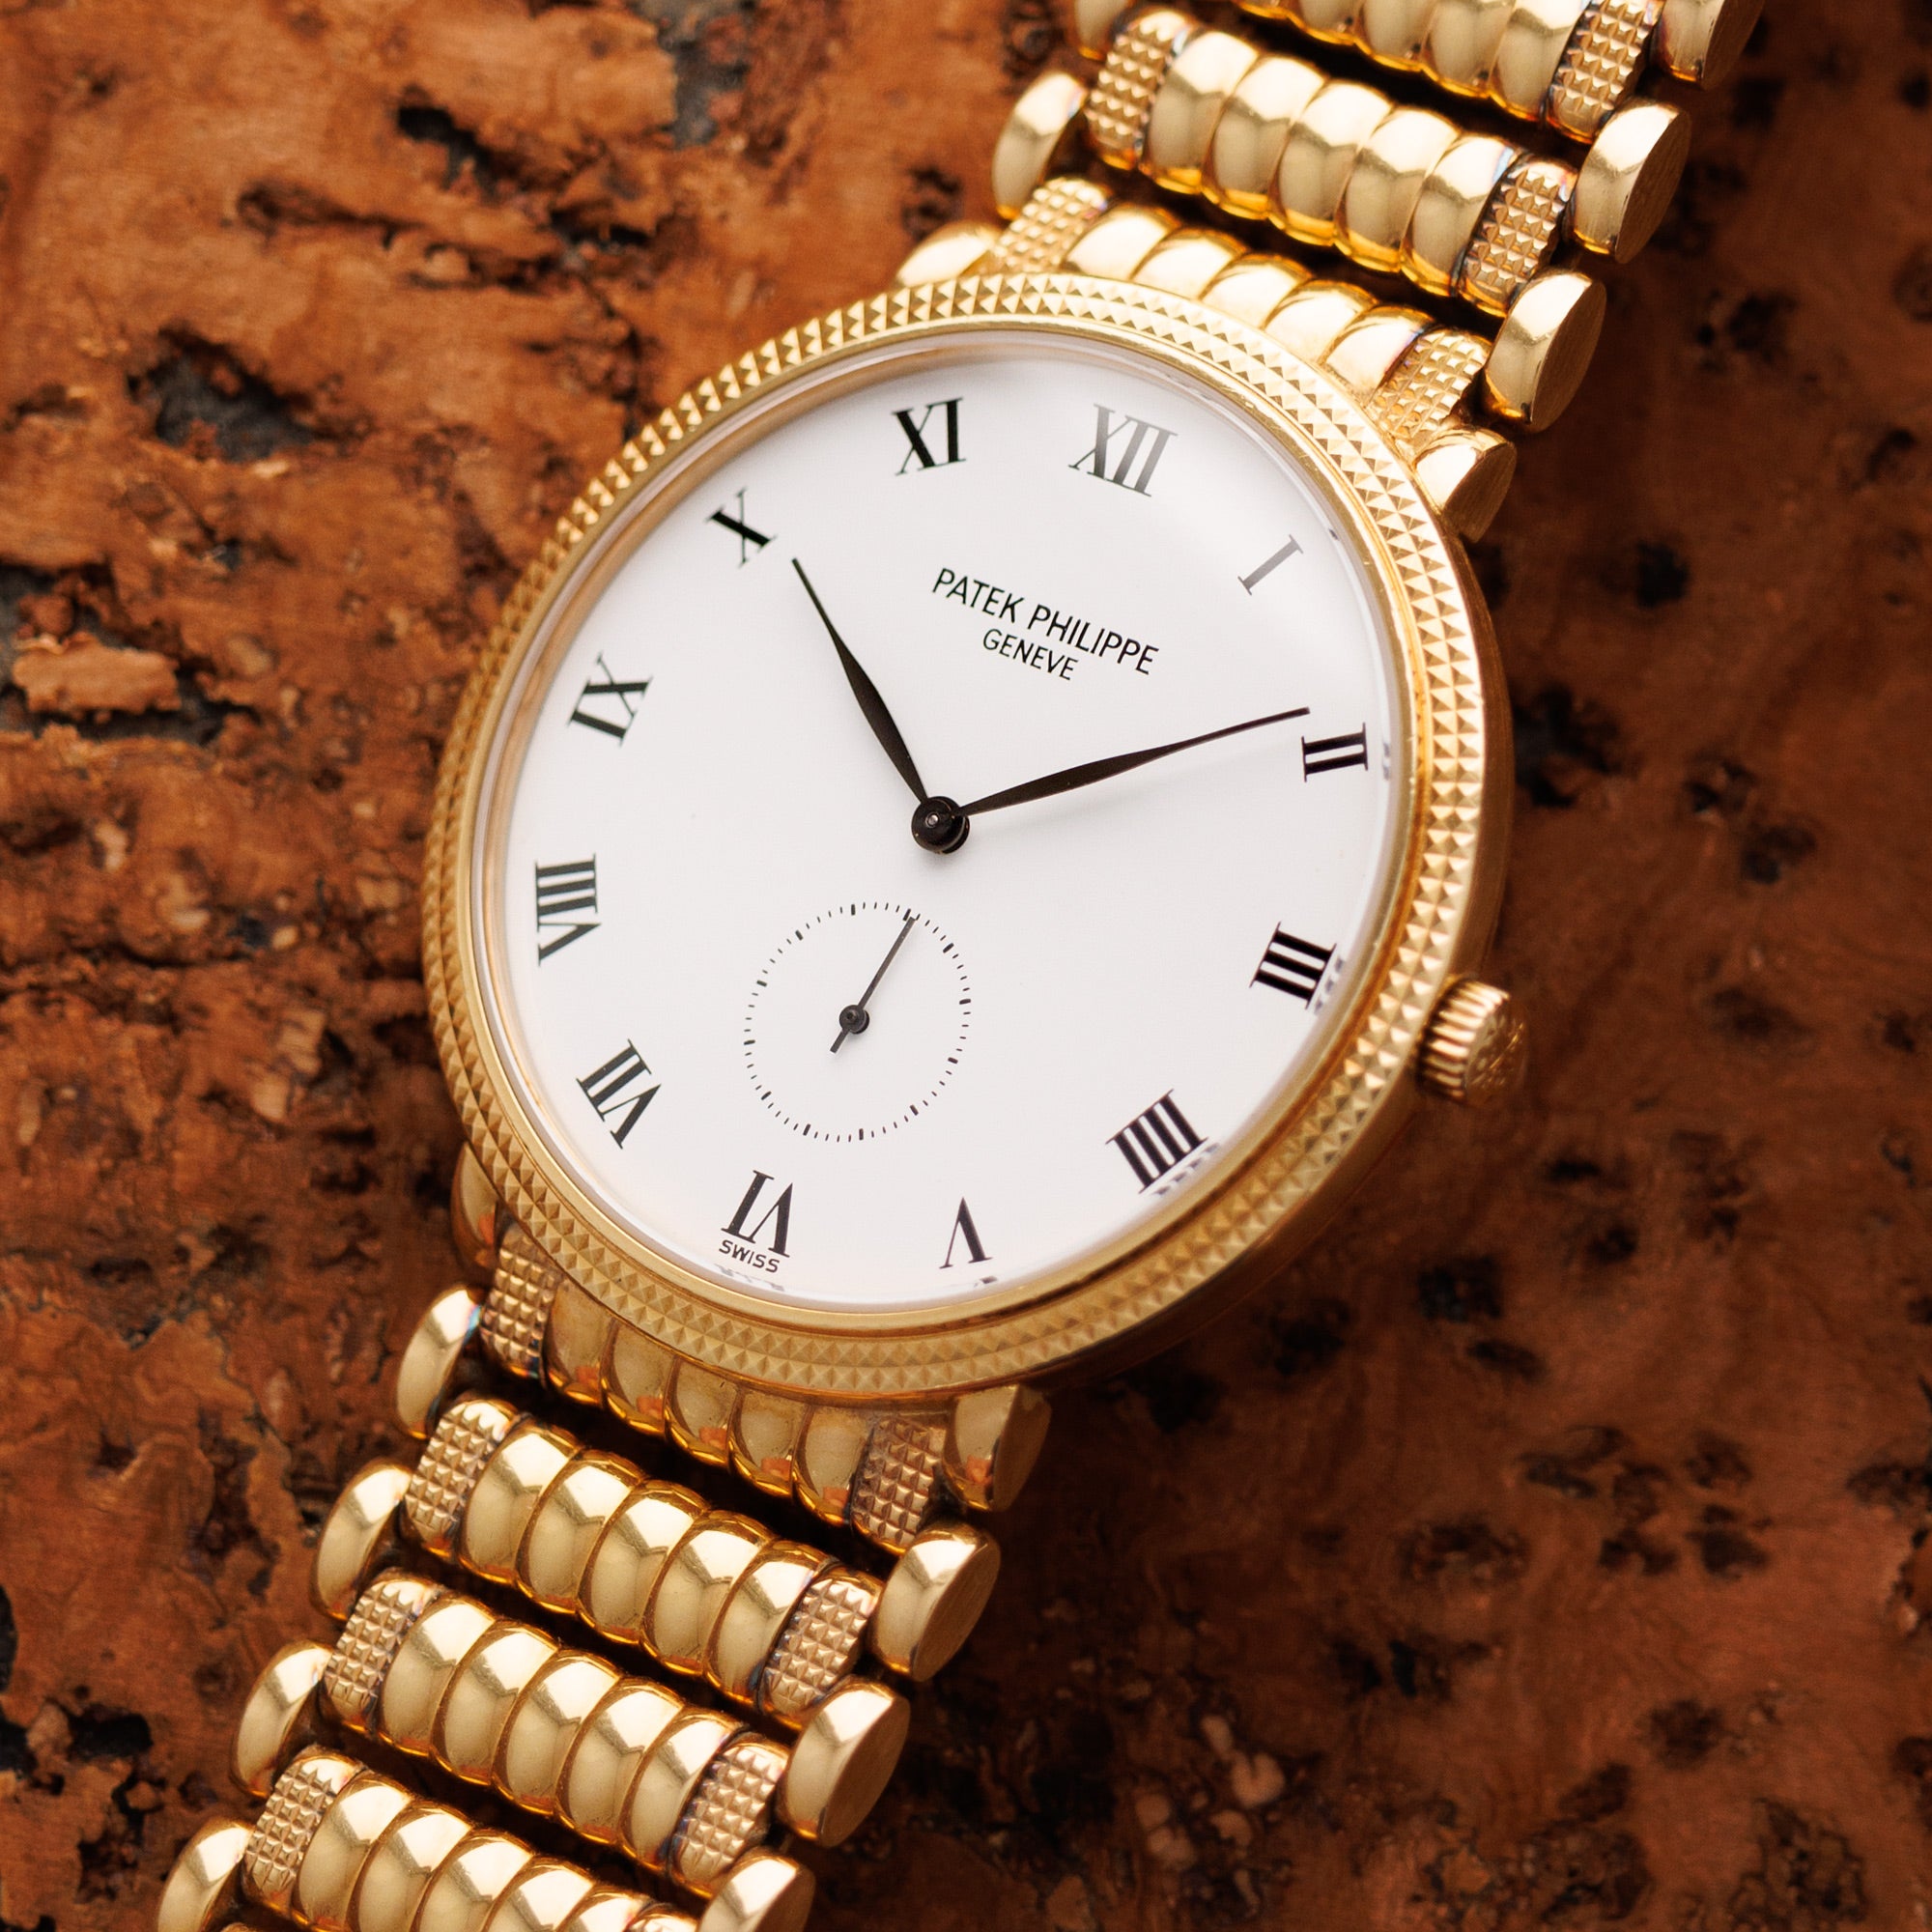 Patek Philippe - Patek Philippe Yellow Gold Calatrava Ref. 3919 on a Bracelet - The Keystone Watches